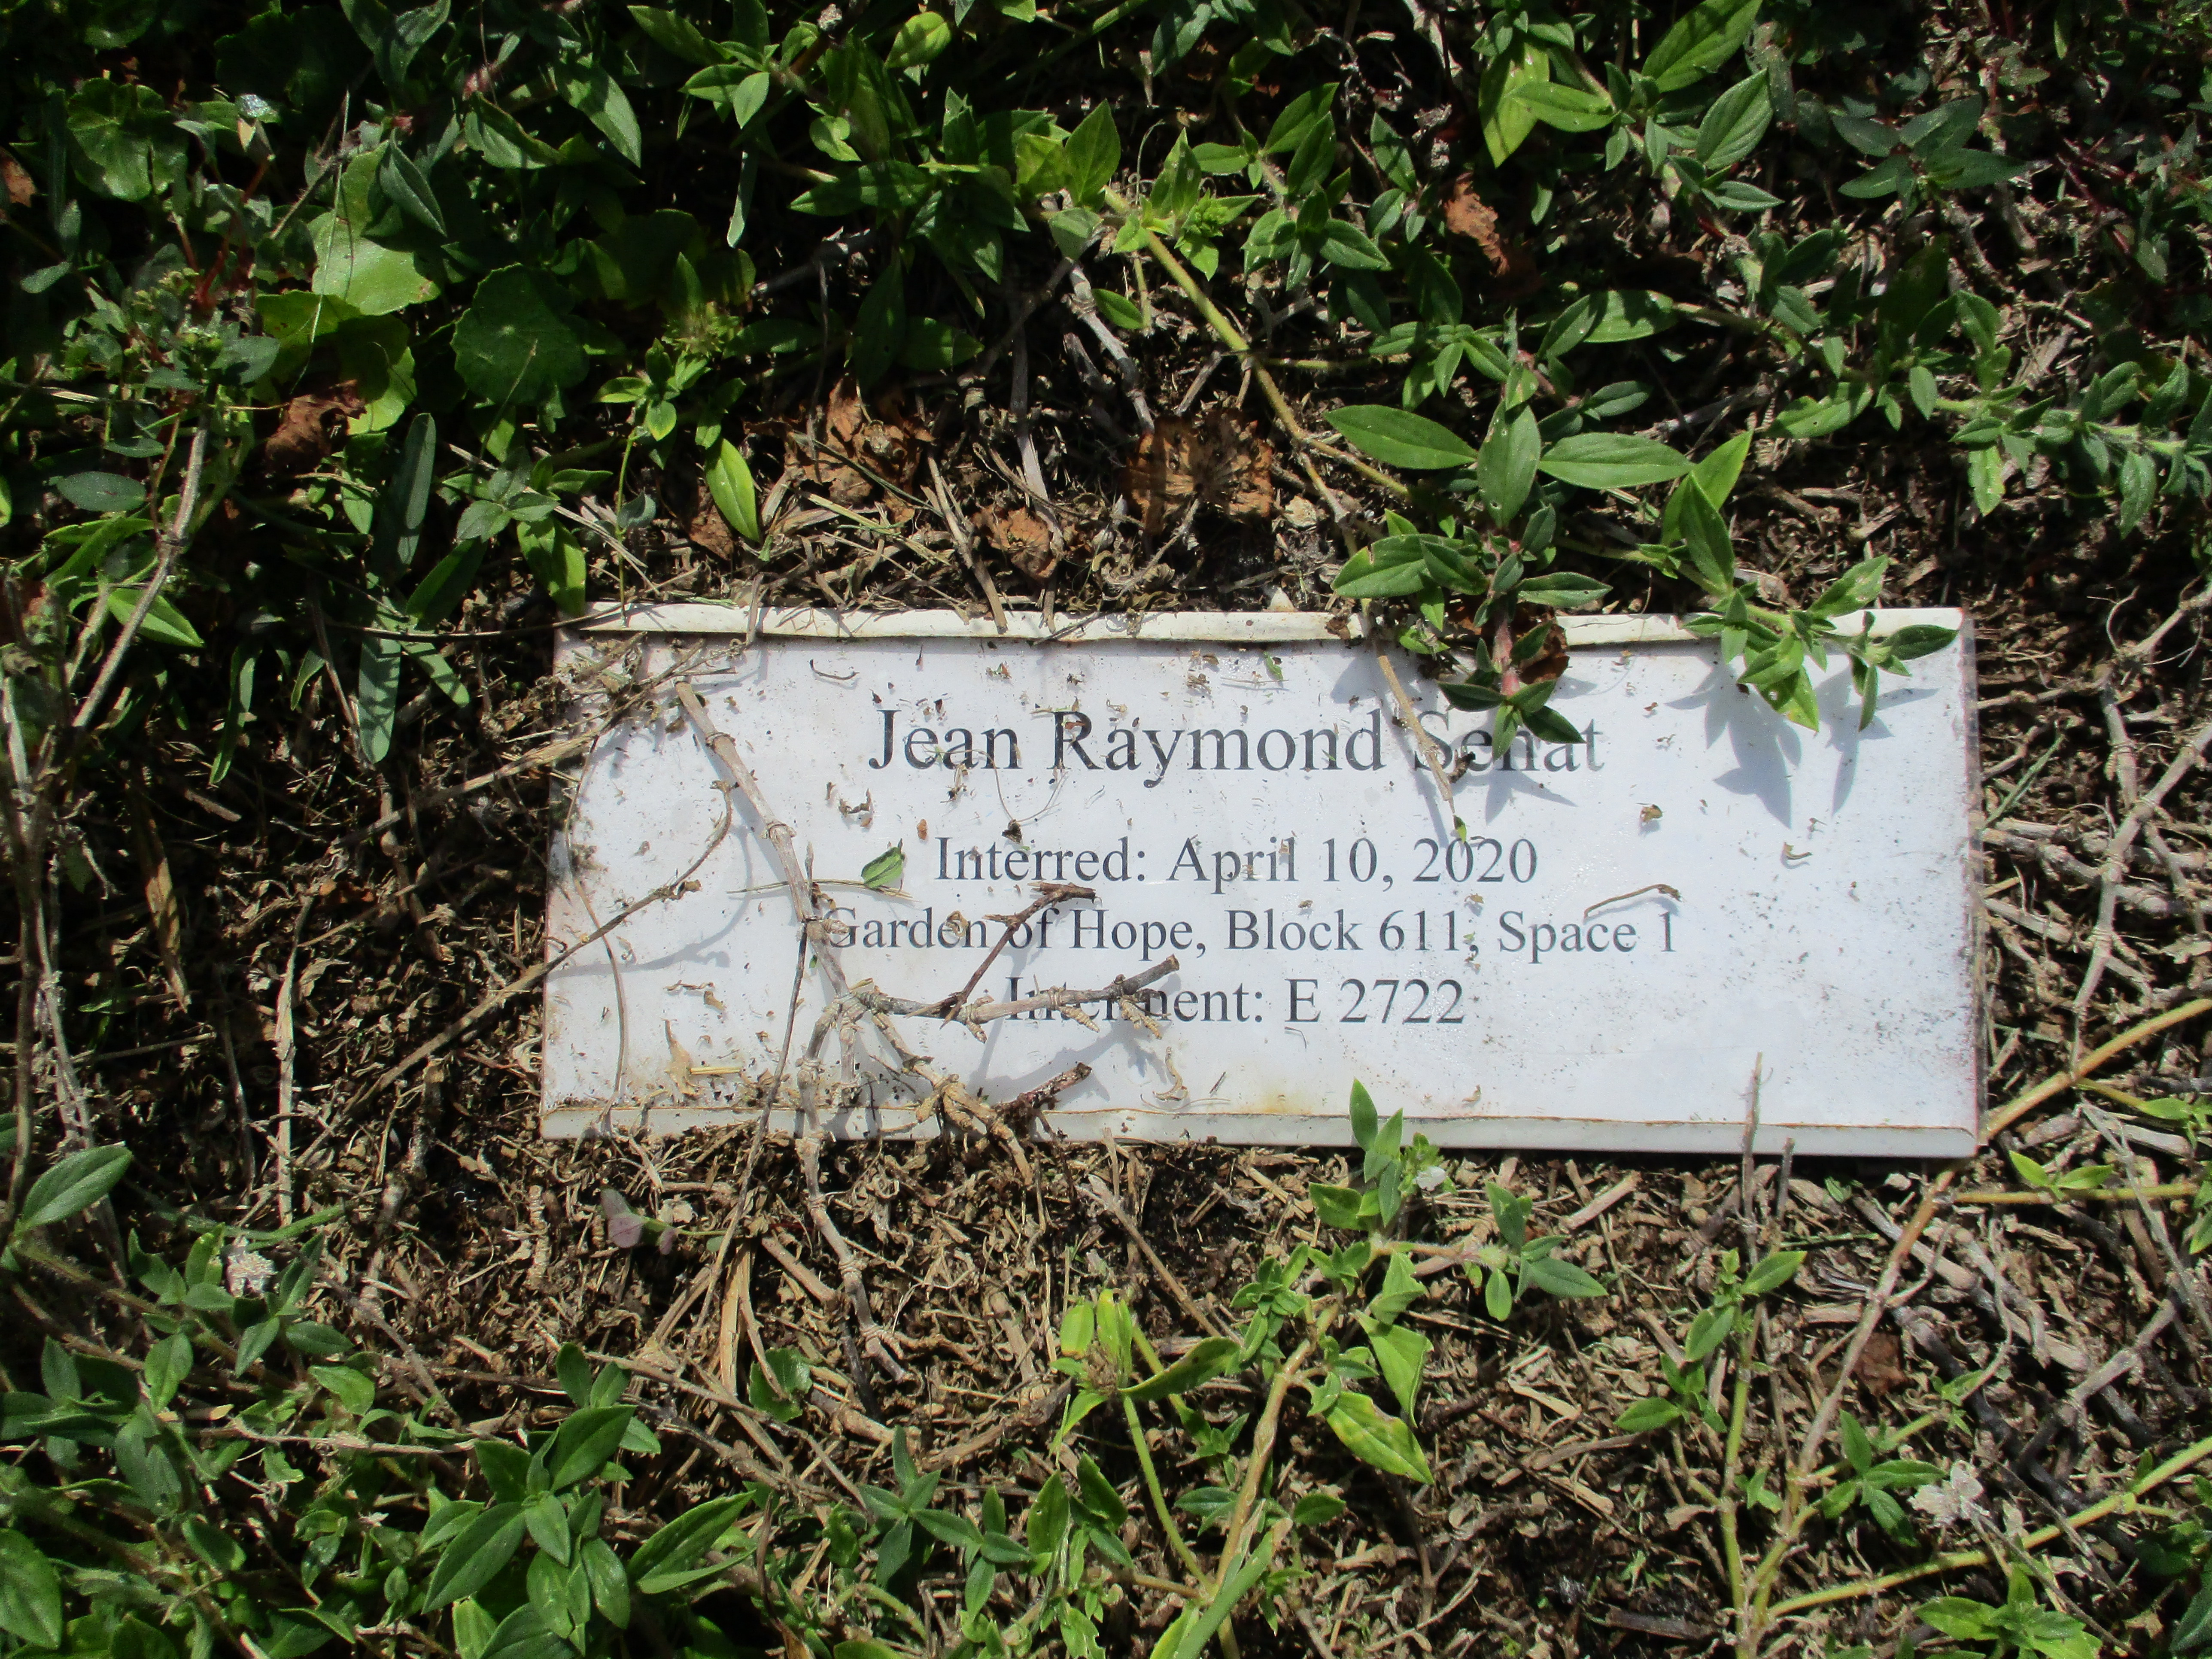 Jean Raymond Senat